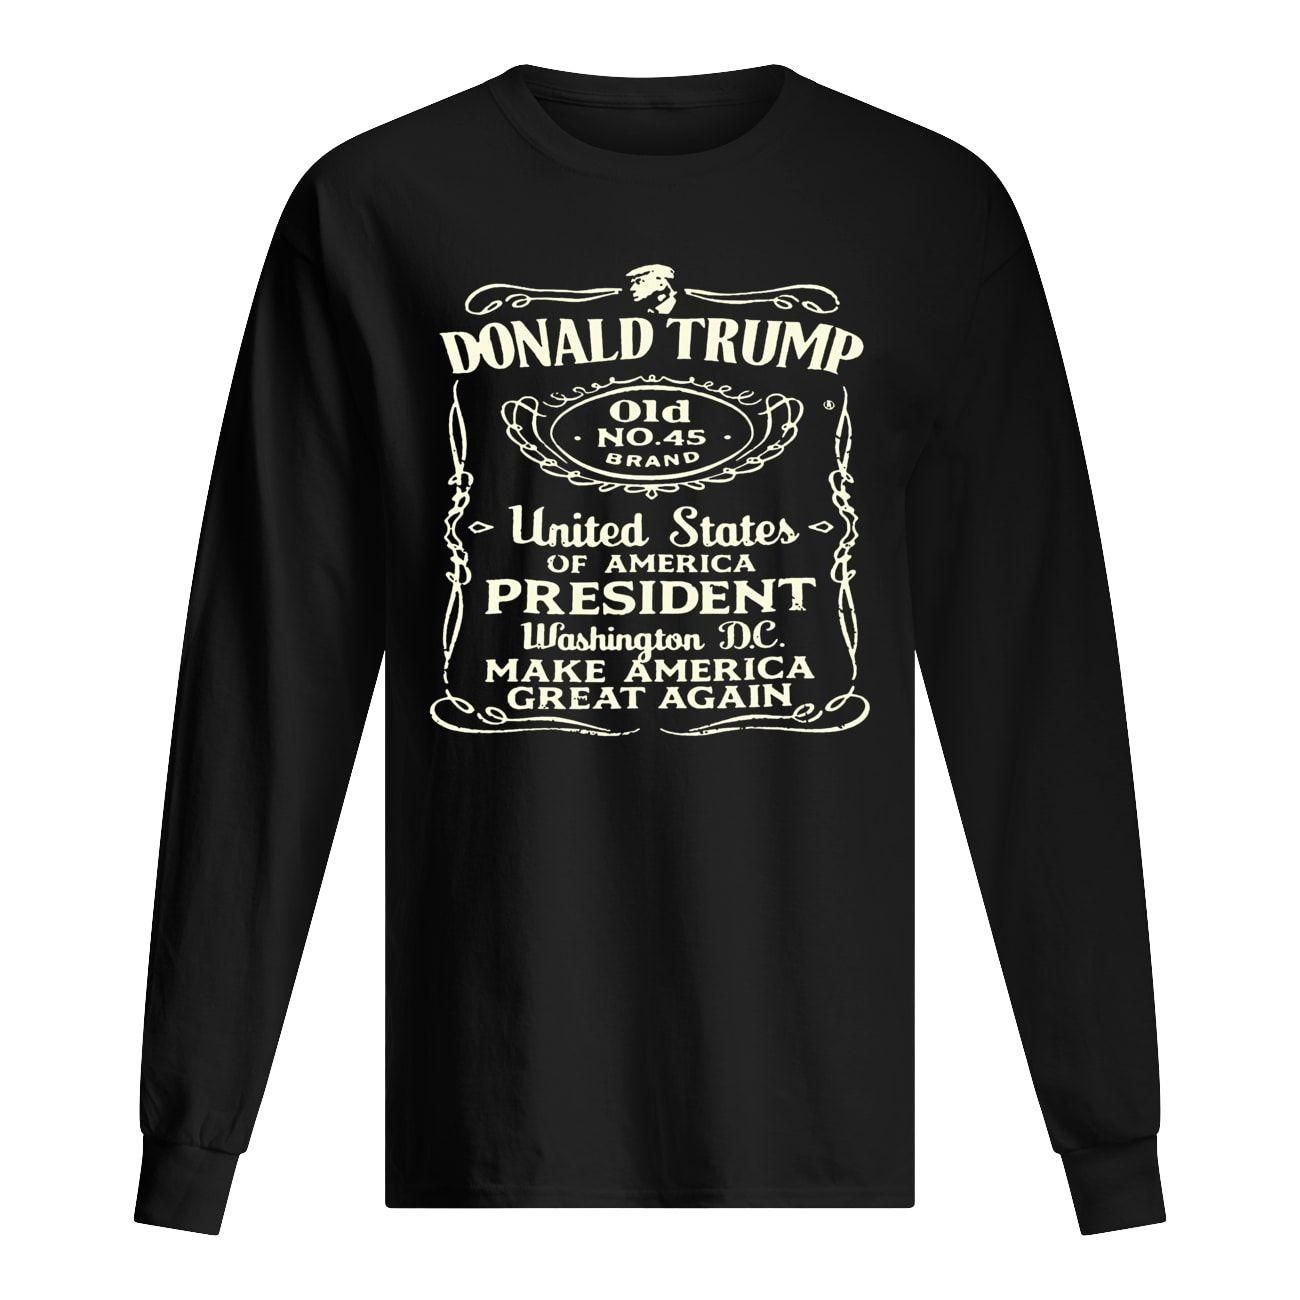 19051333mofebxh Donald trump old no 45 brand united states of america president washington DC make america great again shirt Men's Long Sleeved T-Shirt